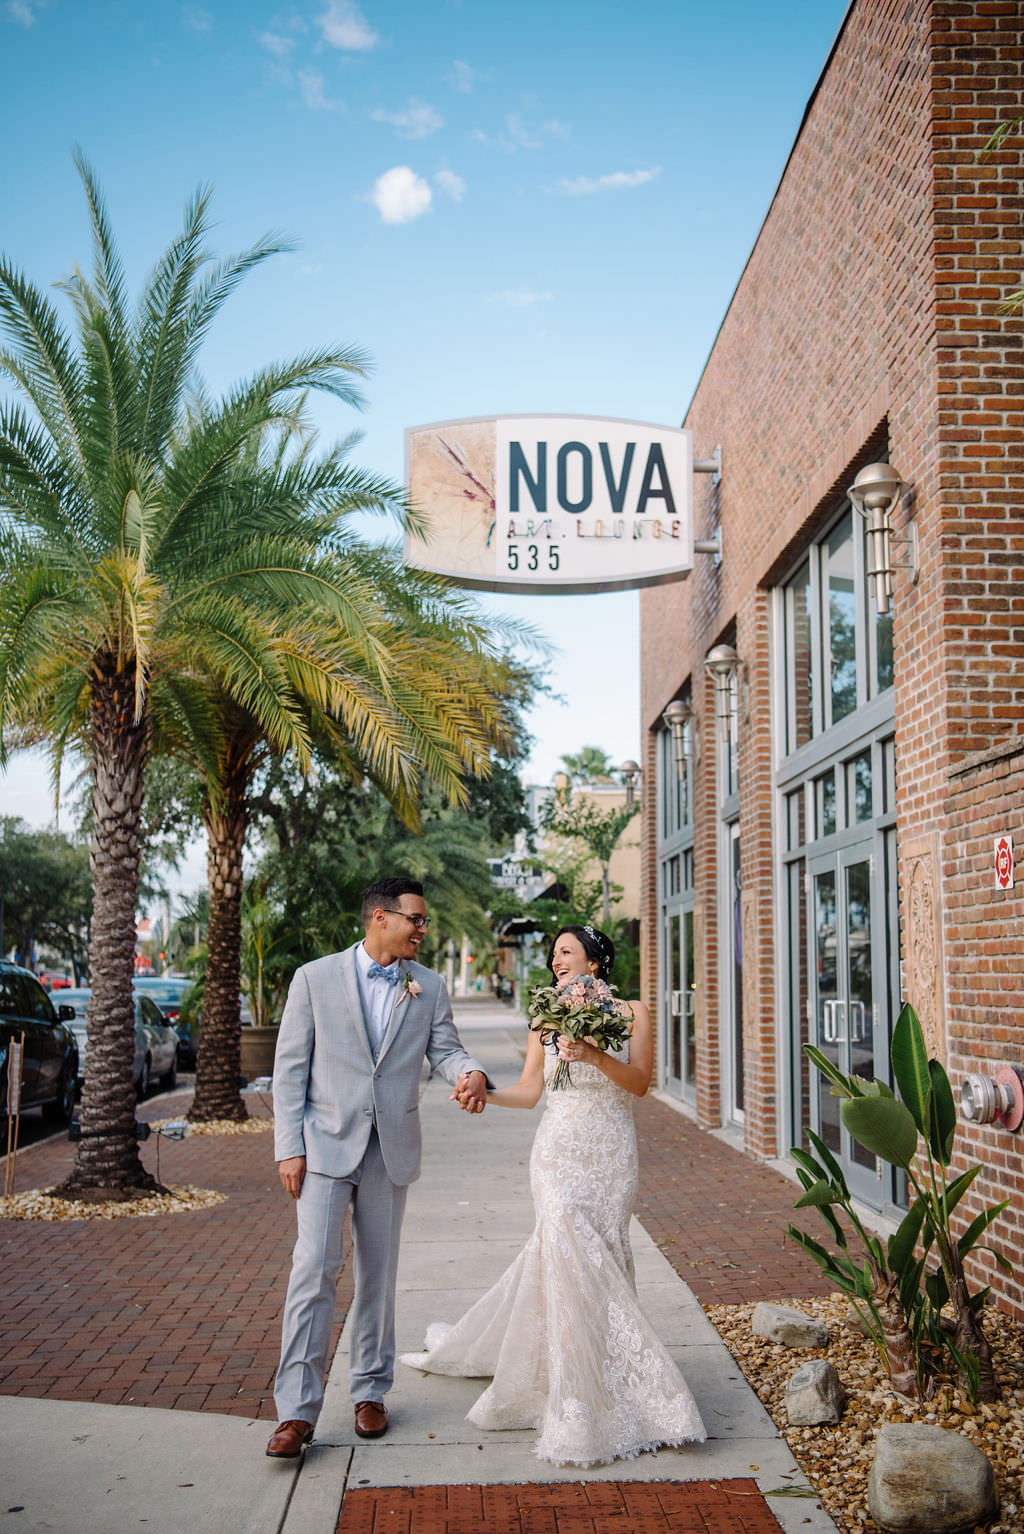 Bride and groom at downtown St. Pete wedding NOVA 535 | Tampa Bay Wedding Photographer Kera Photography